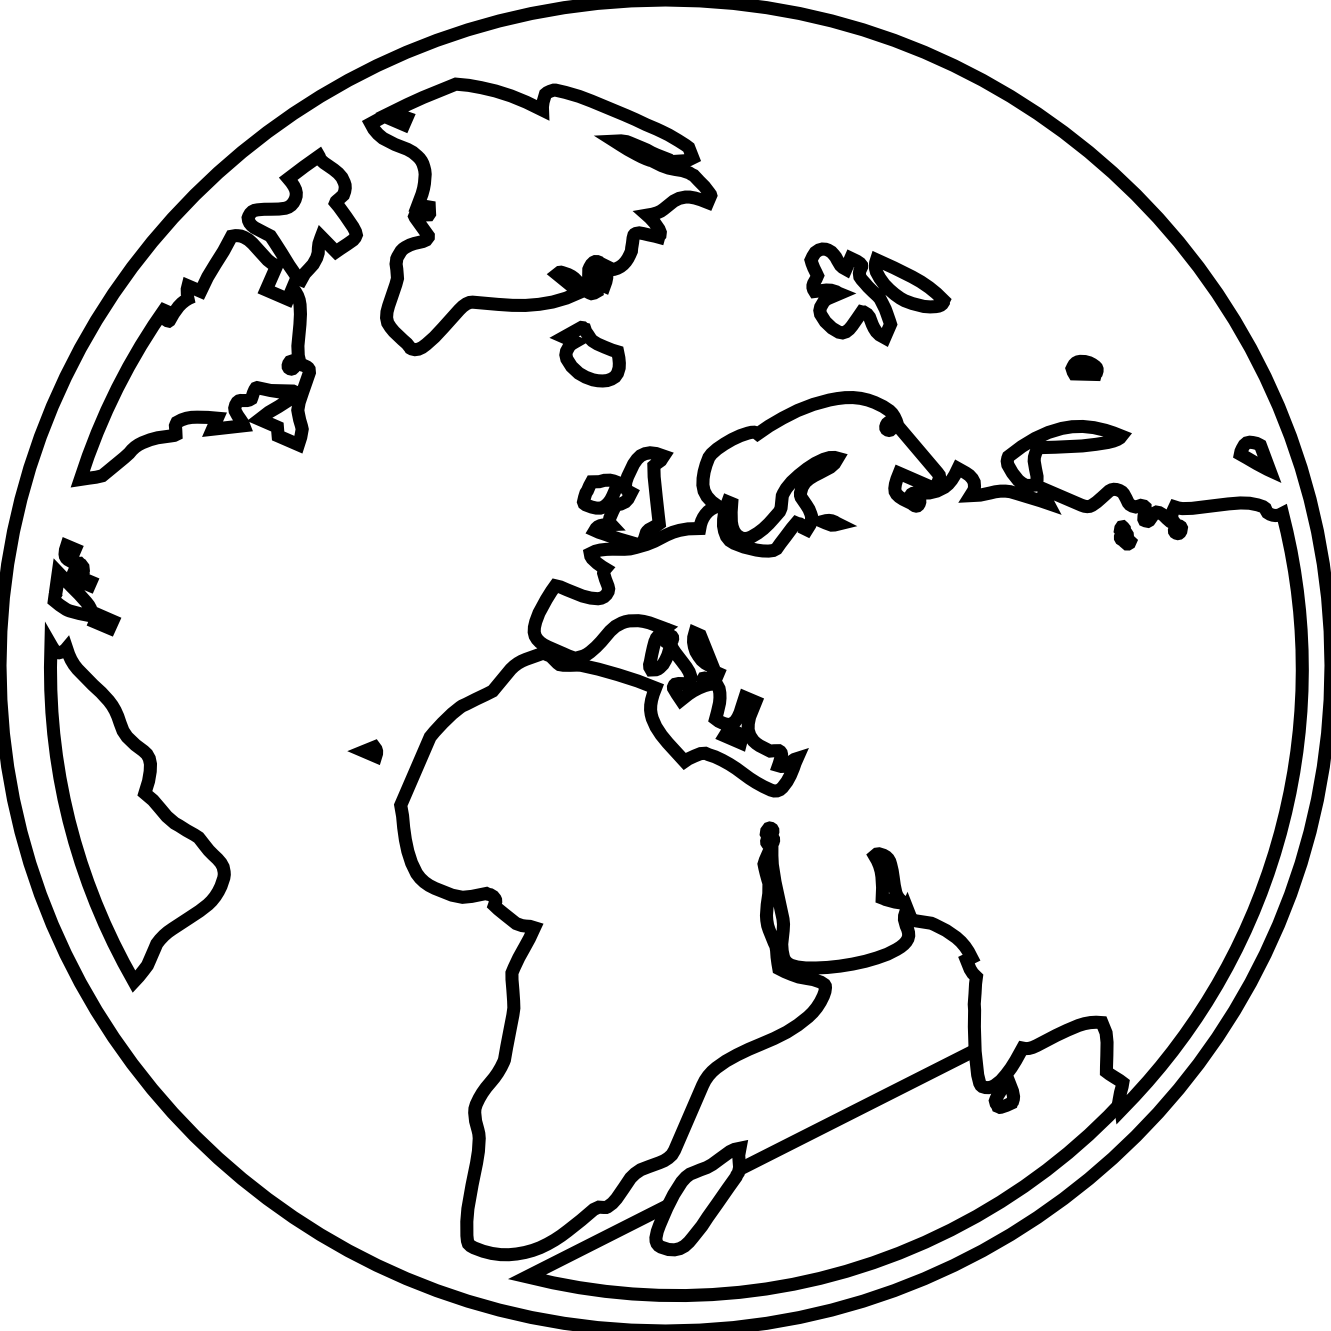 rg 1 24 earth globe black white line art tattoo  - Clipart library 